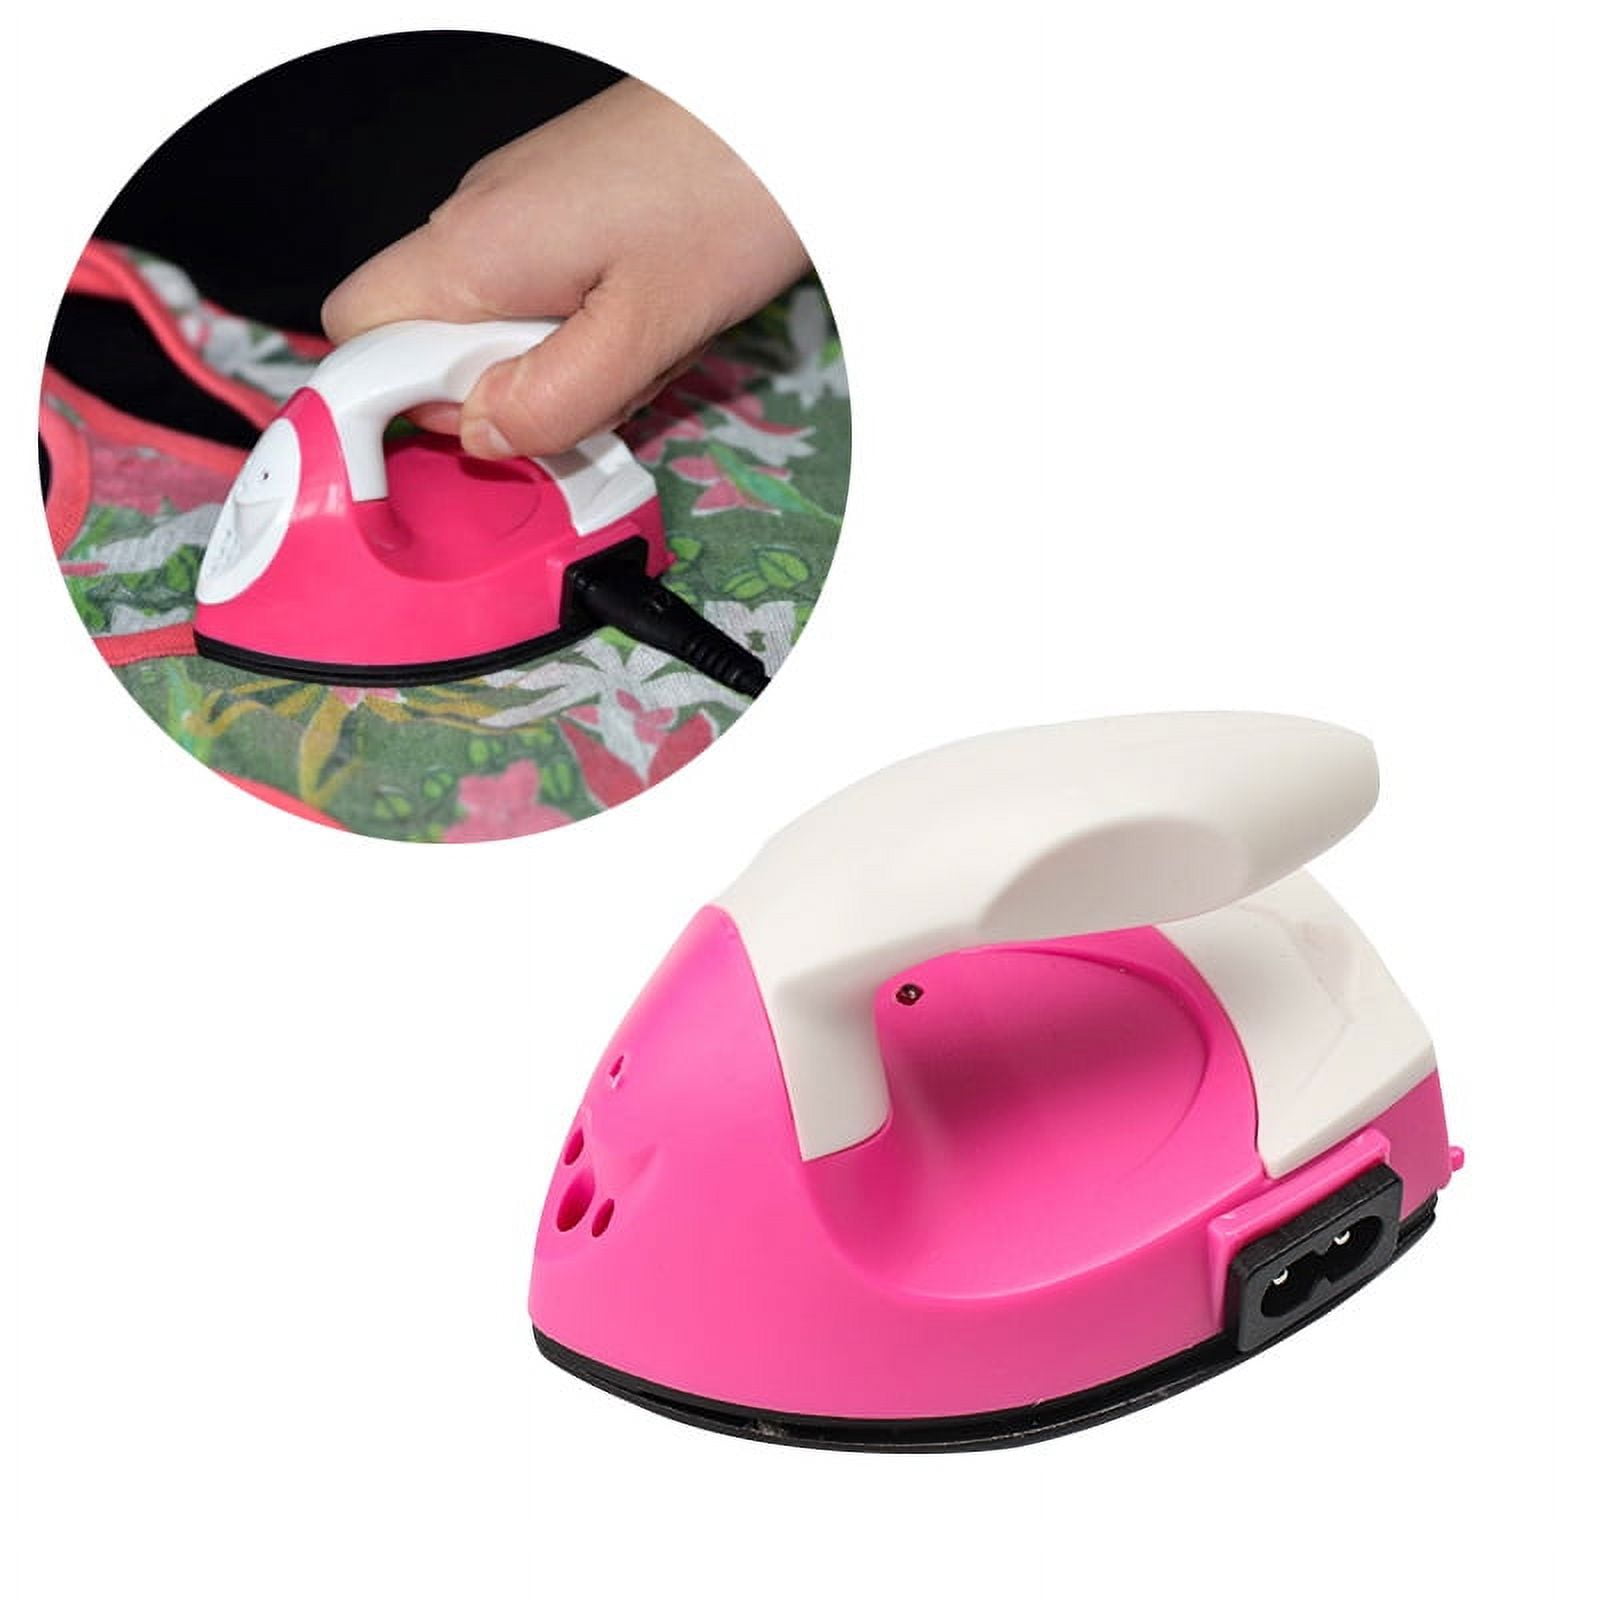 Darice Mini Crafting Iron Portable Travel Pink 1204-59